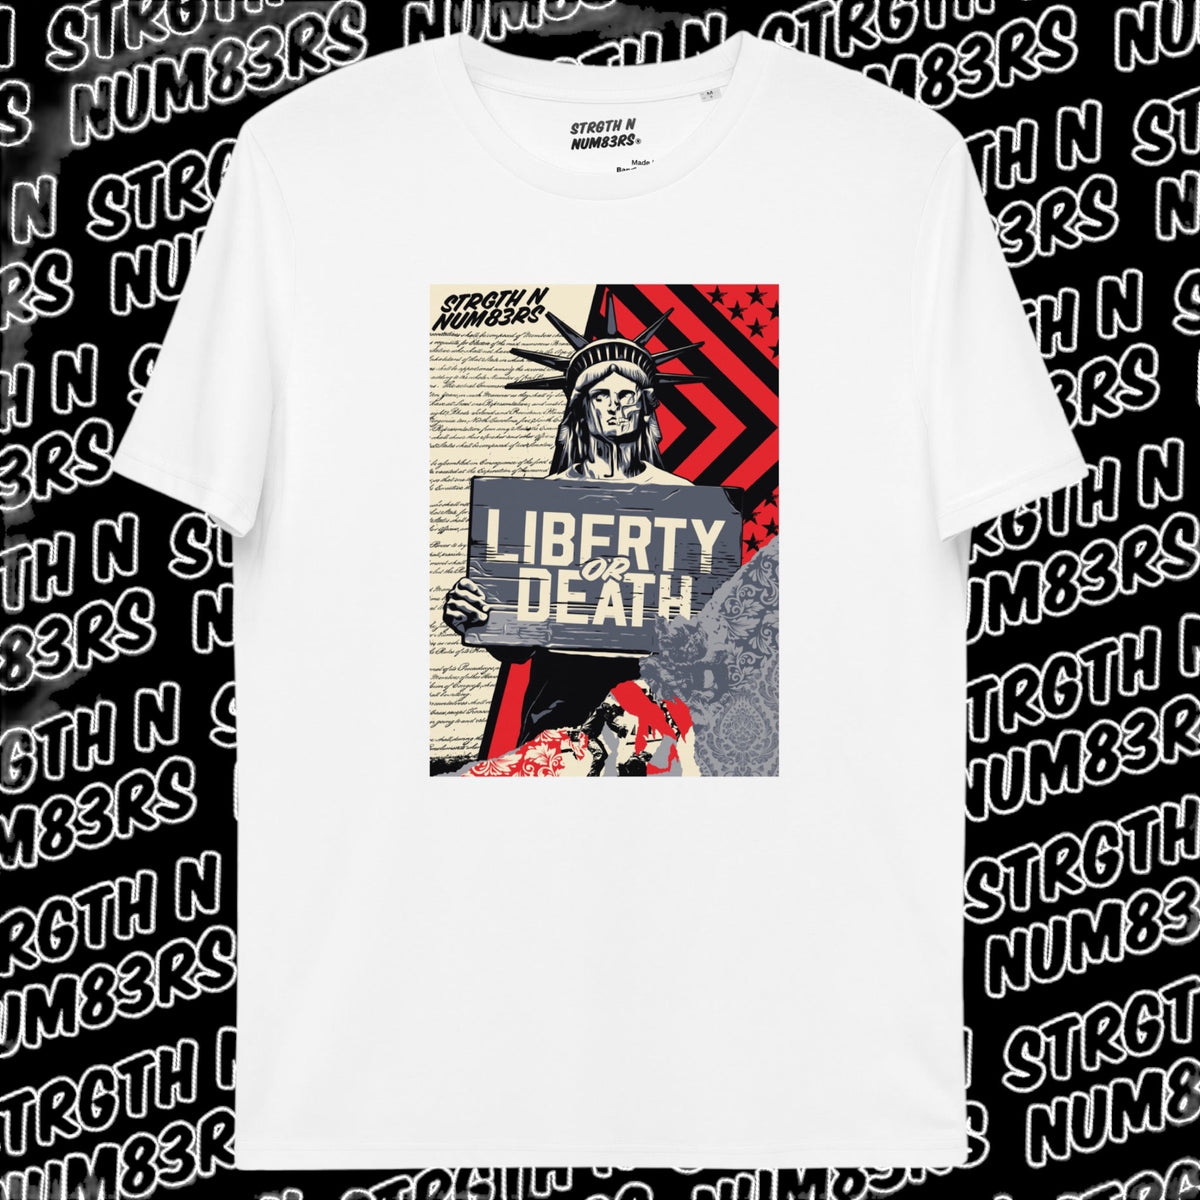 STRGTH N NUM83RS Liberty or Death Organic Cotton Tagless T-Shirt